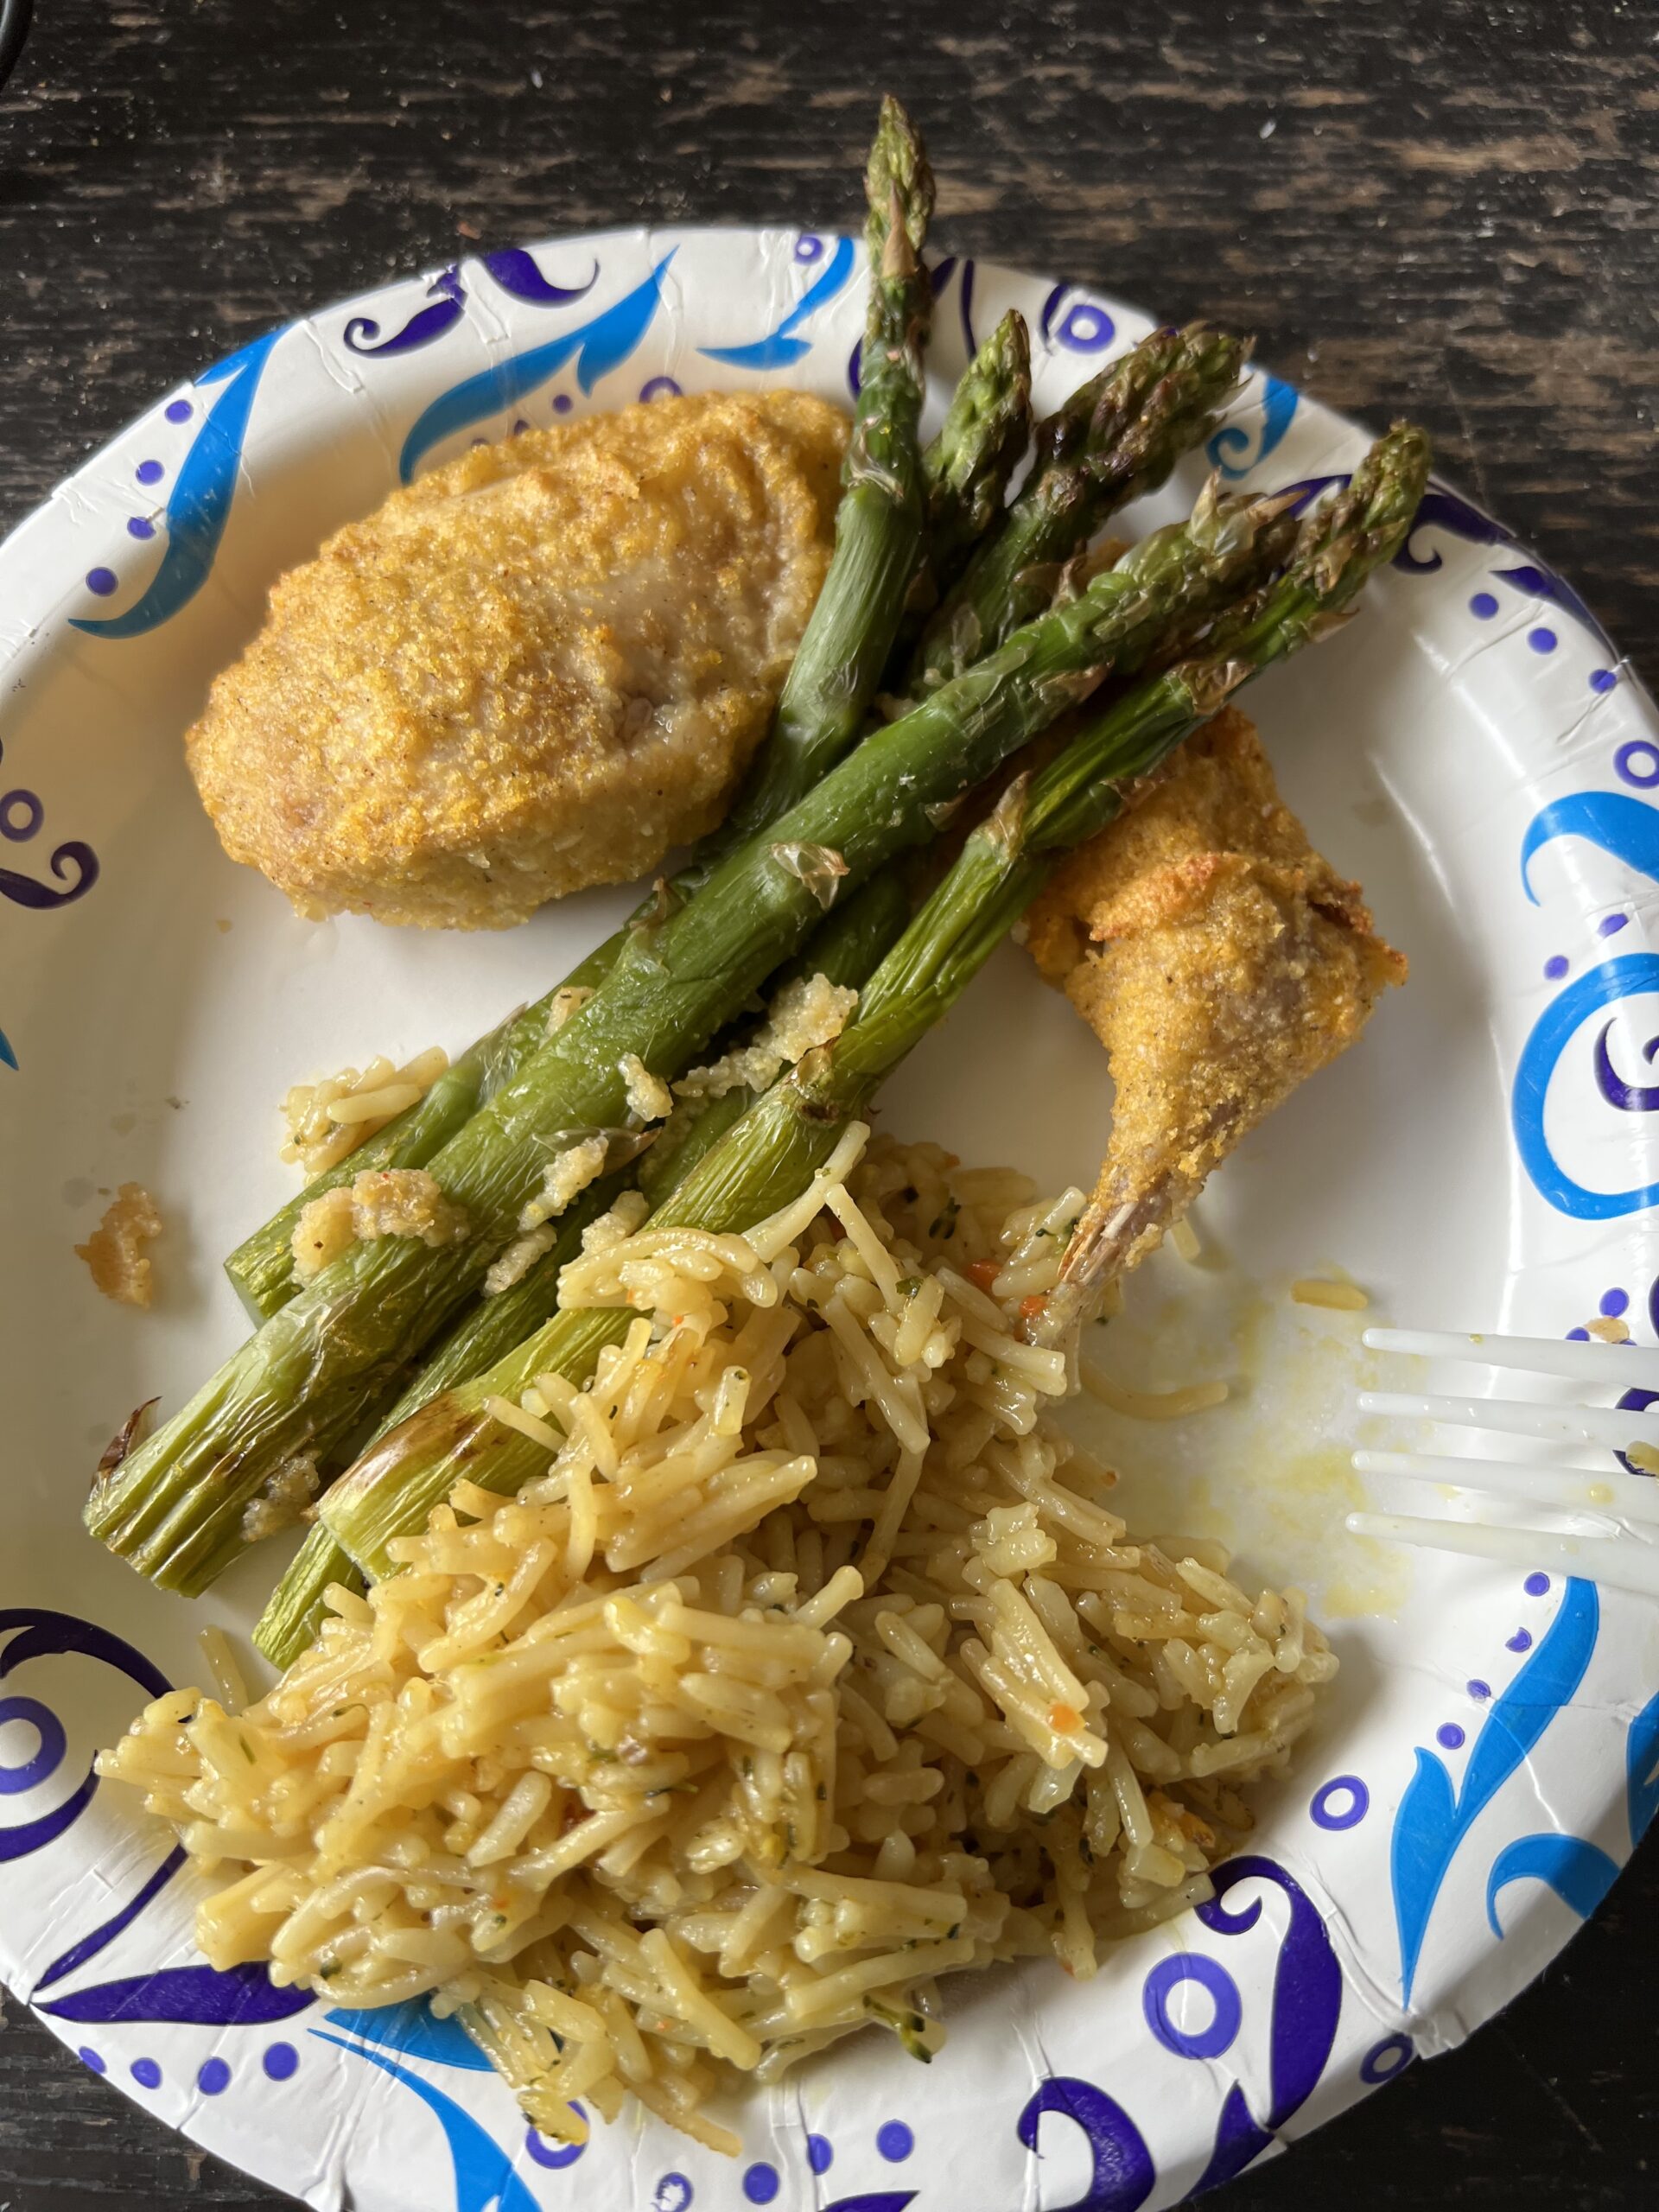 Dinner plate with rice, asparagus and fried chukar partridge